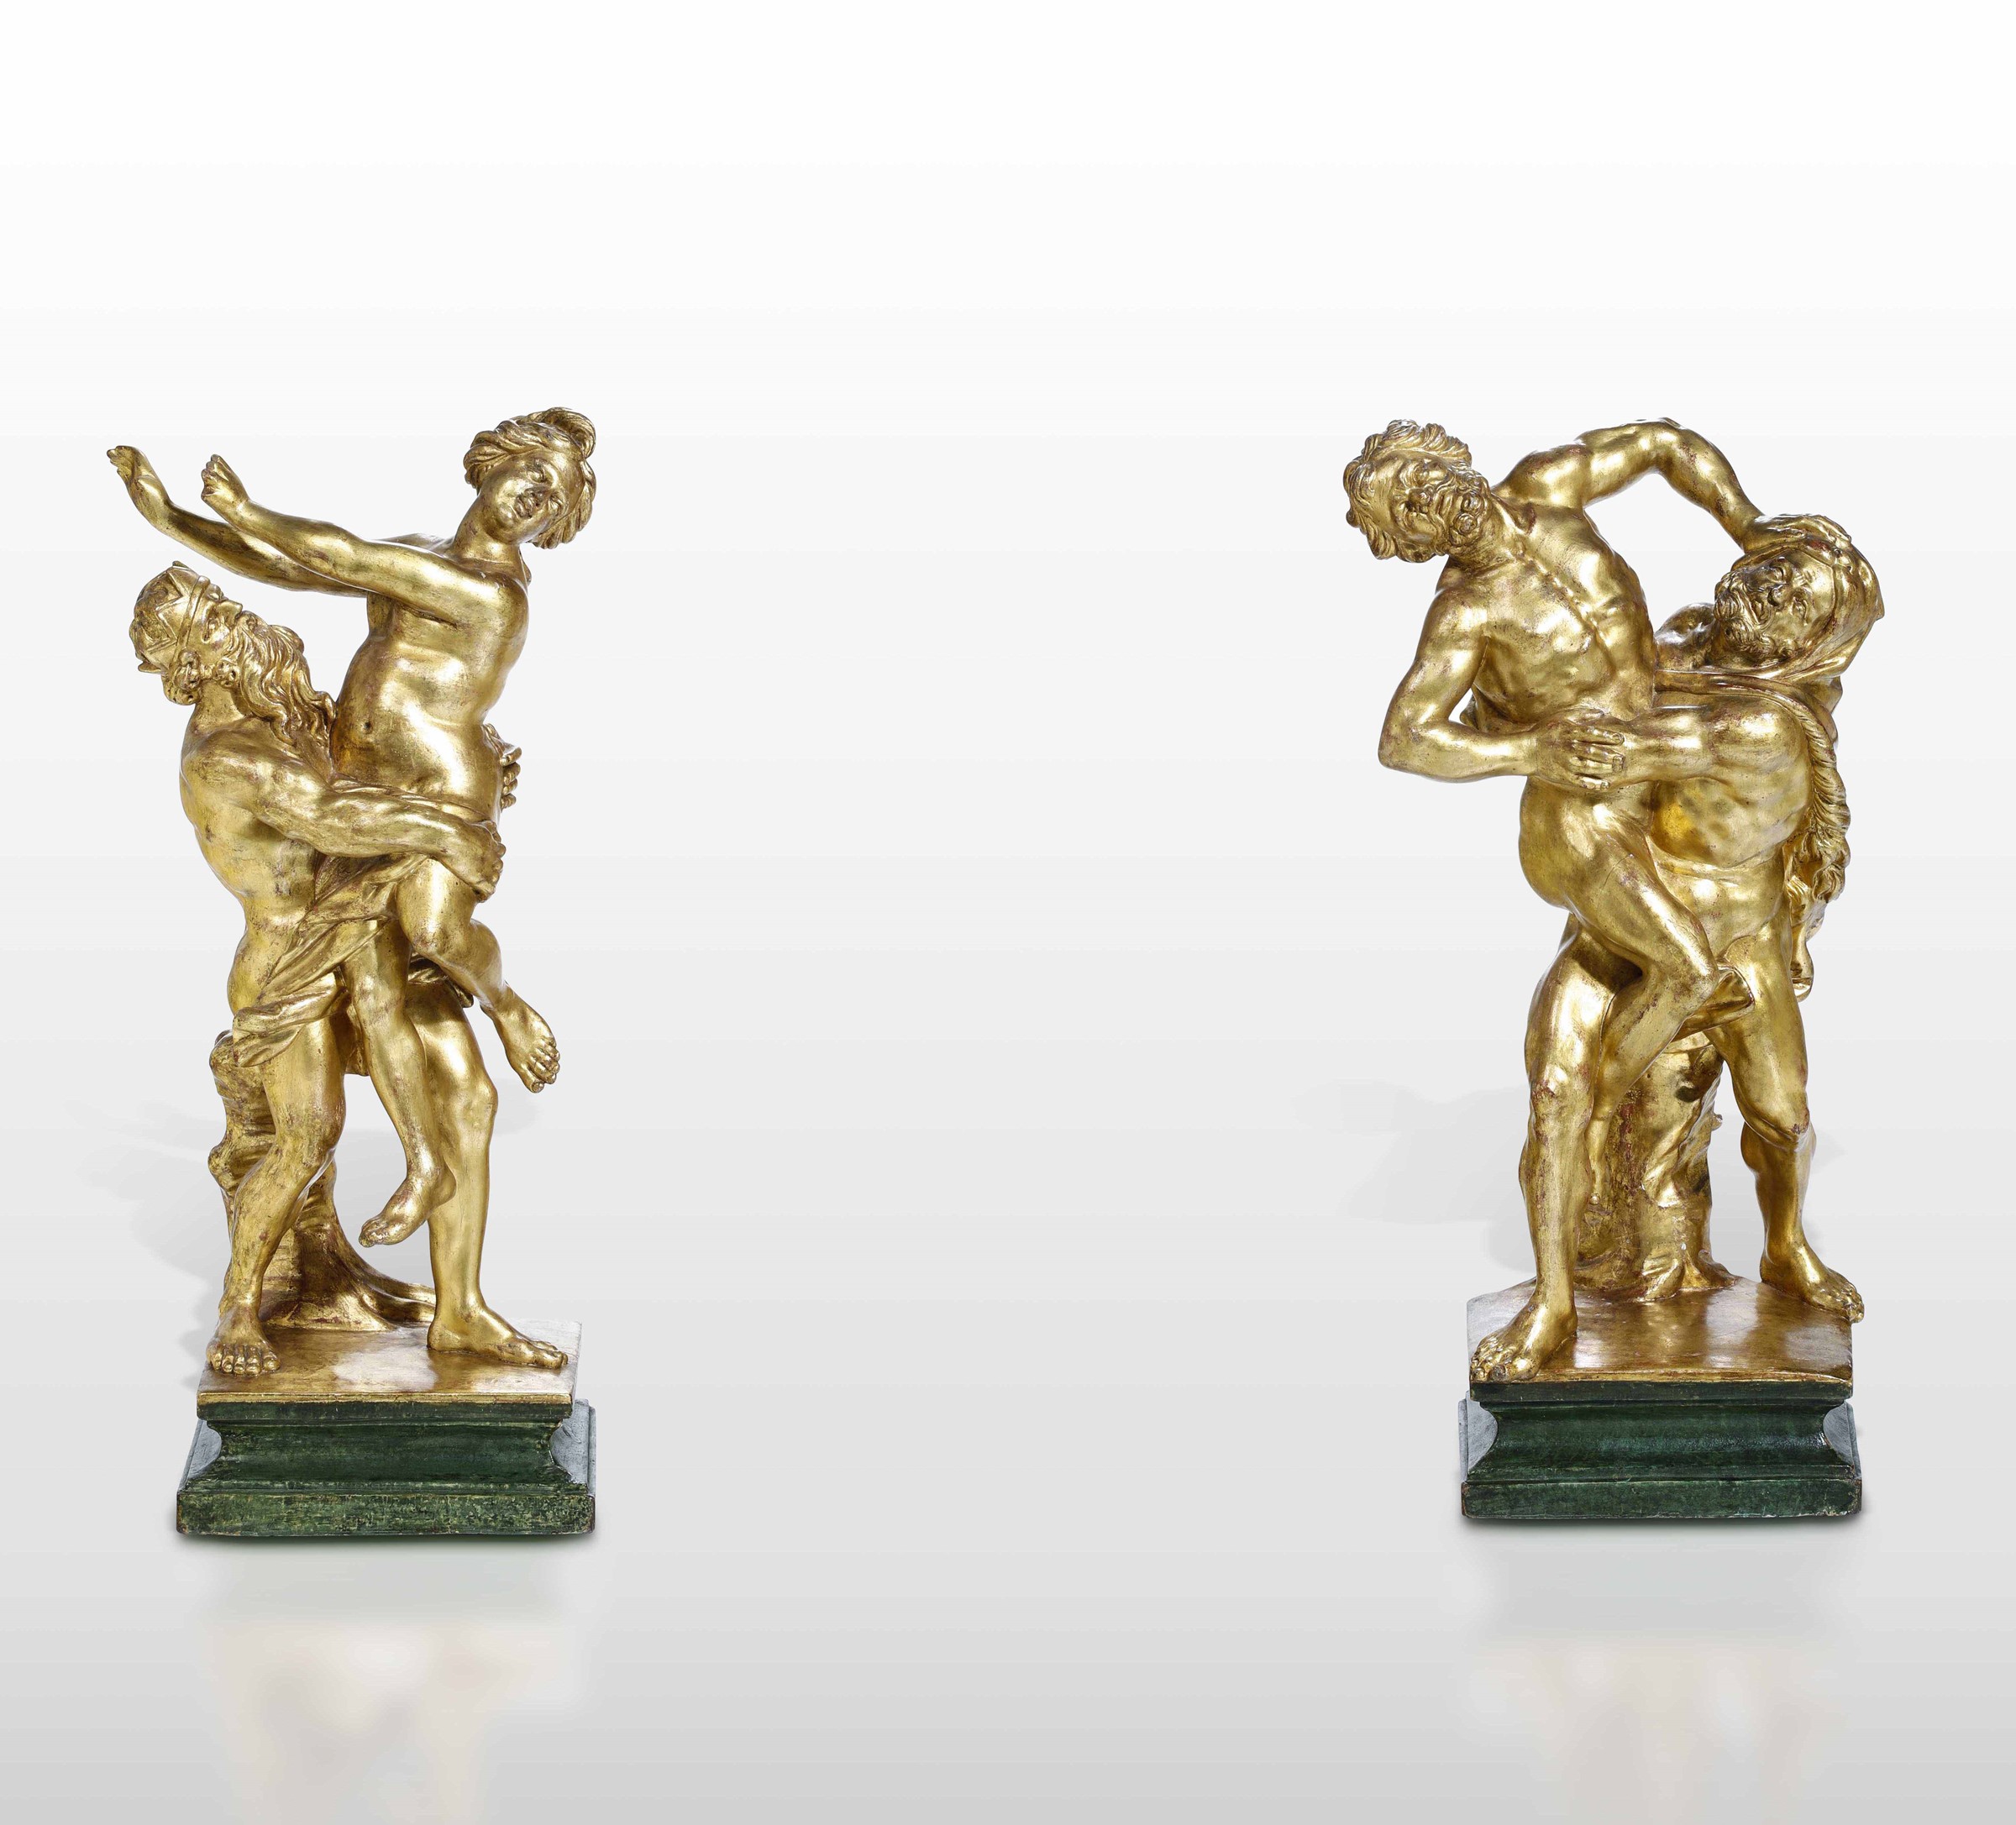 Two gilt wood sculptures, Rome, 1600s - altezza cm 49 circa -